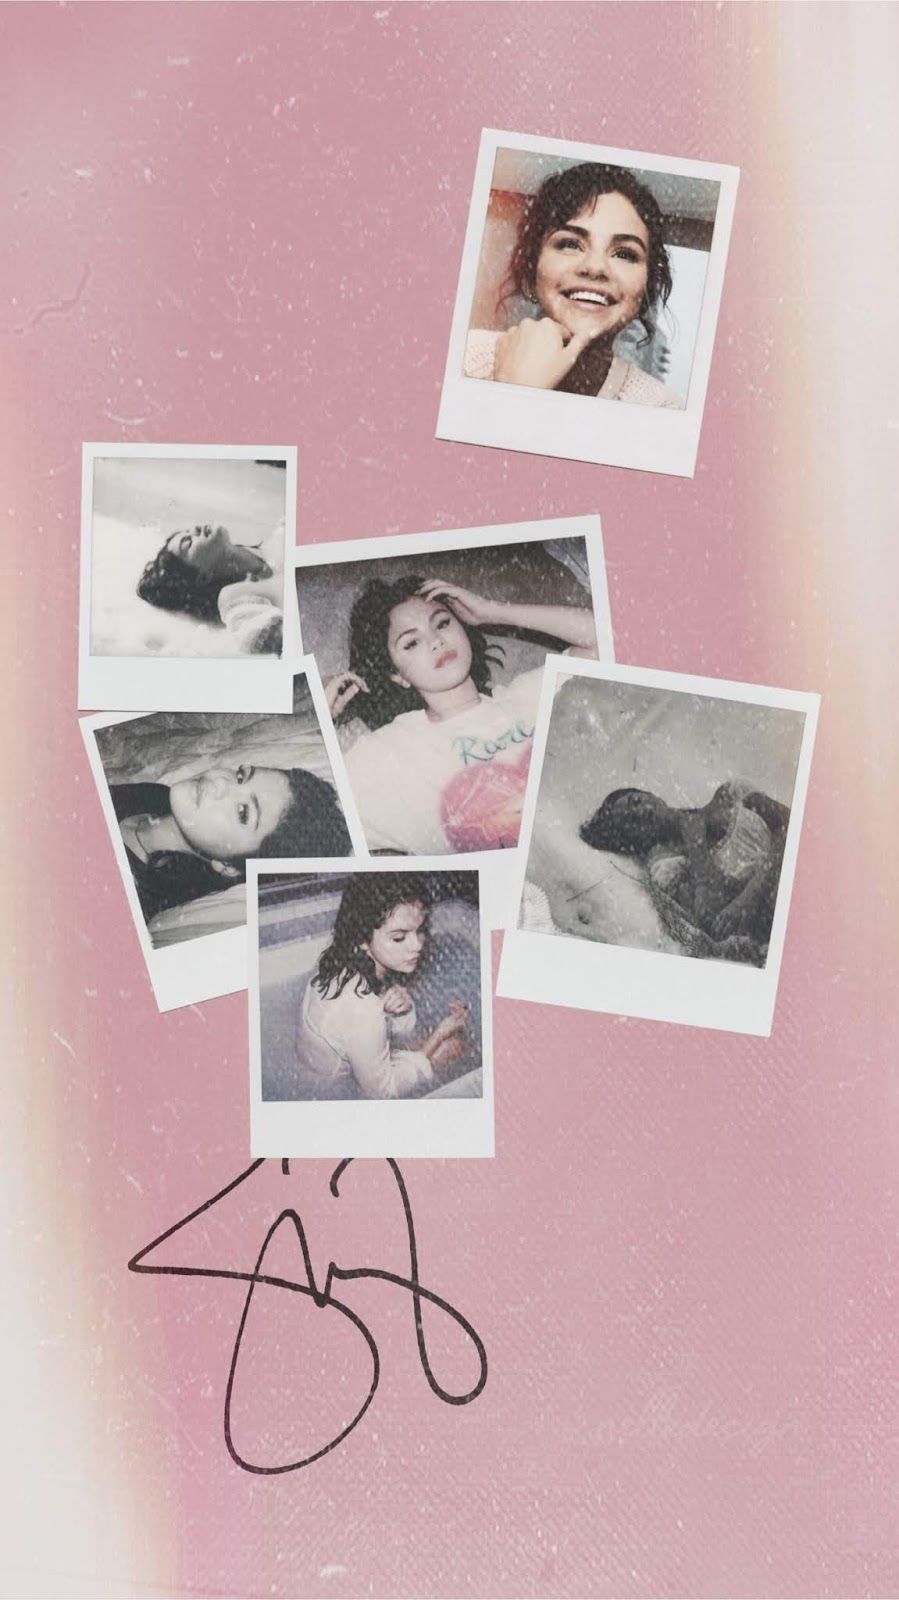 Selena Gomez Aesthetic Wallpapers